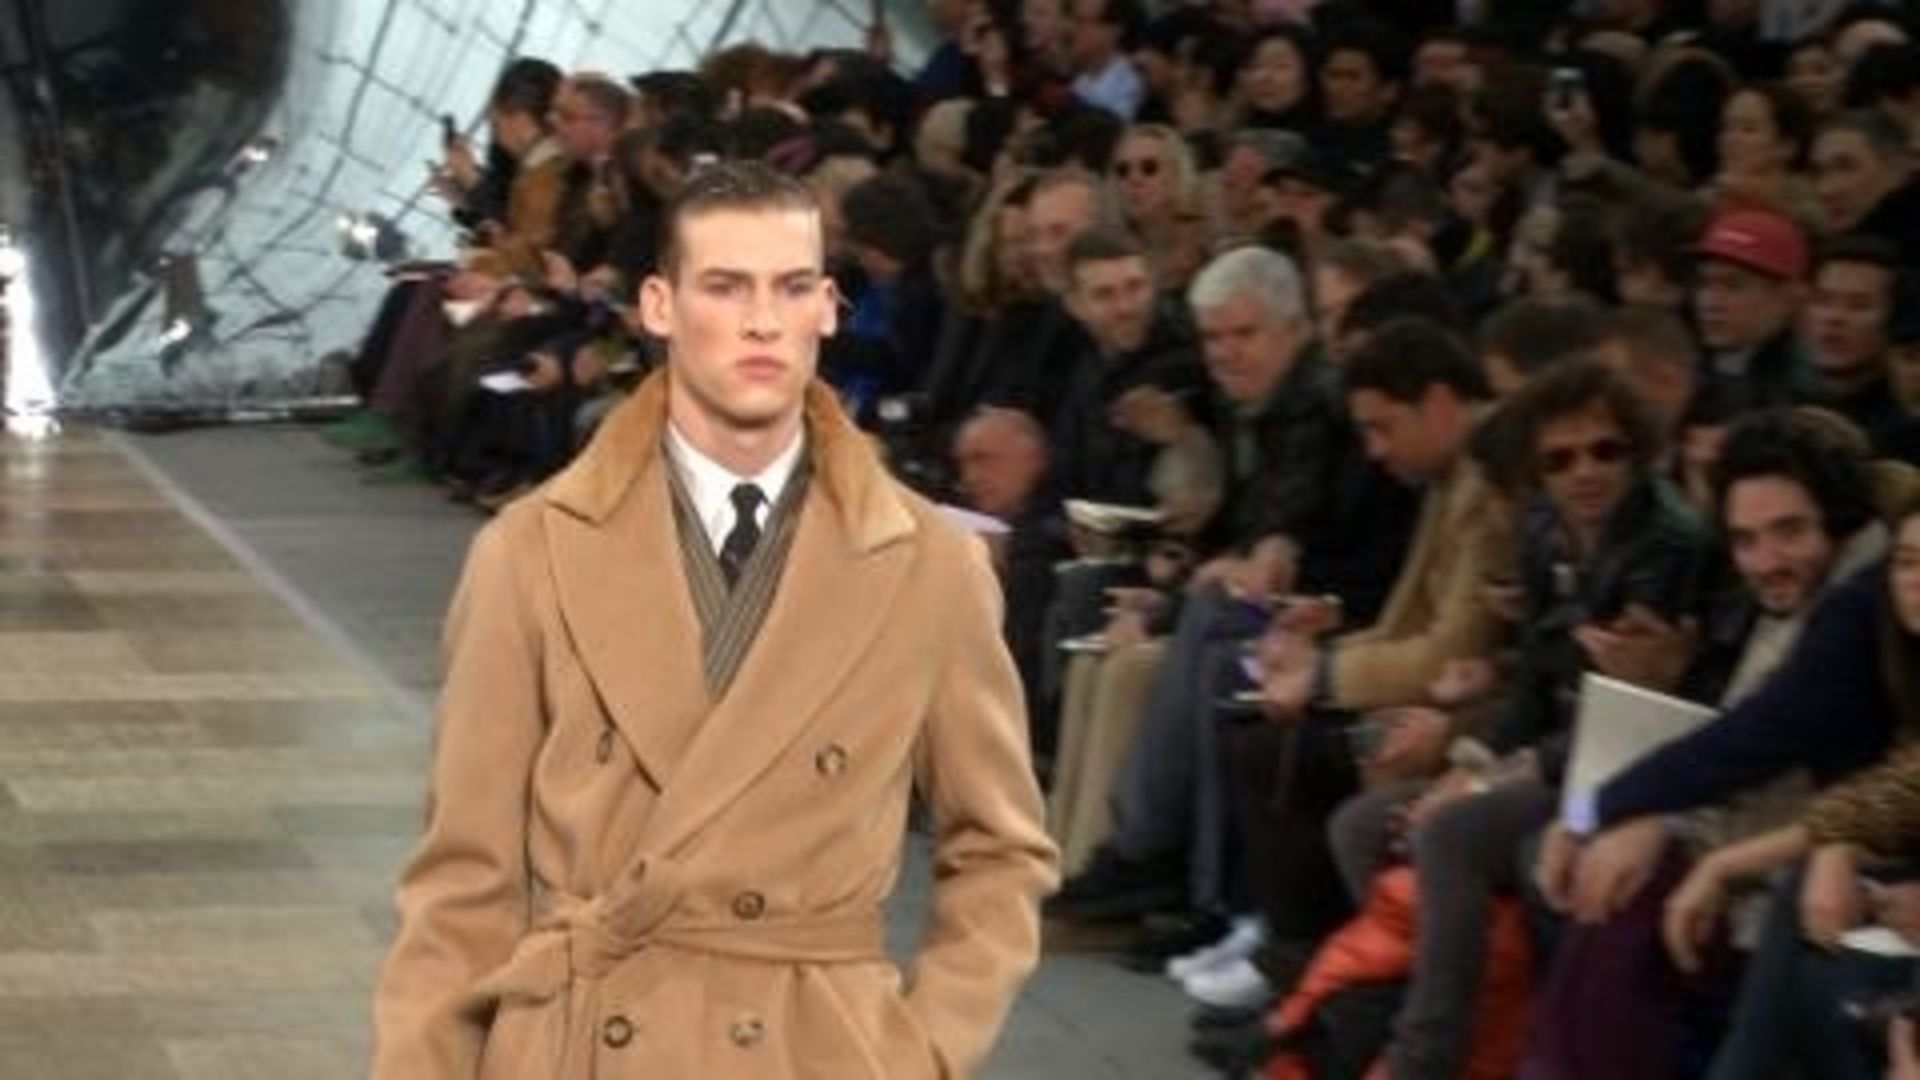 Louis Vuitton Fall 2012 Menswear collection, runway looks, beauty